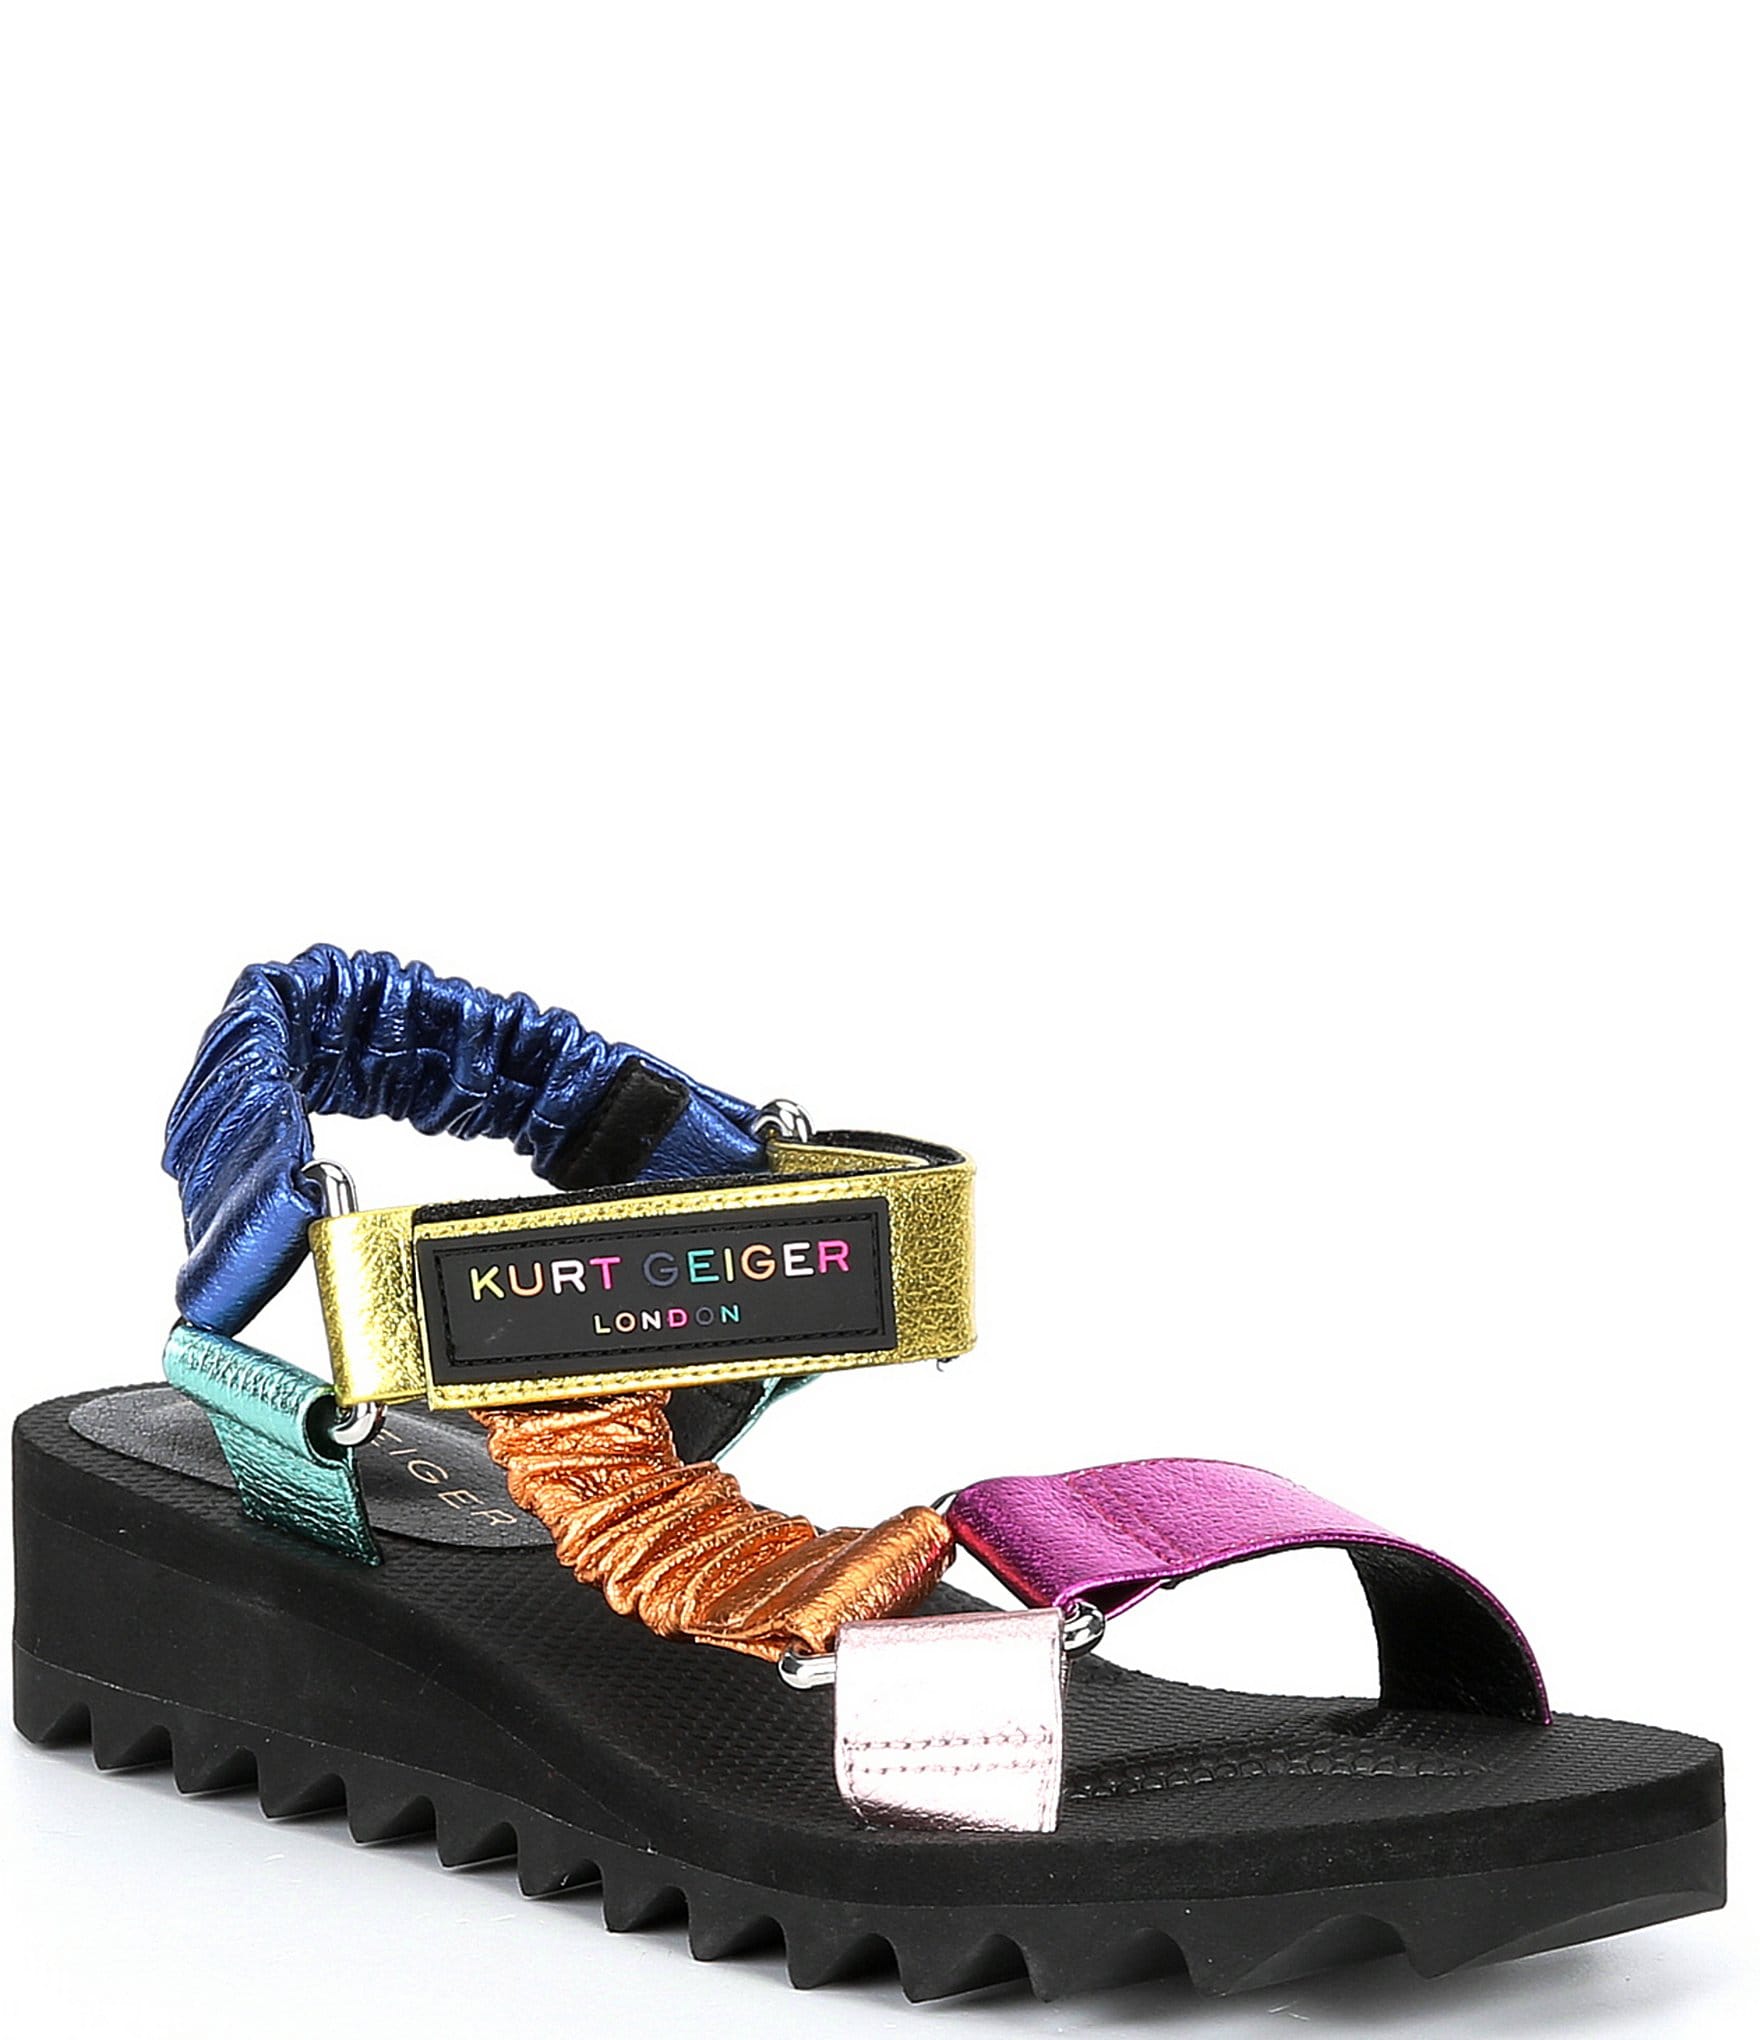 Kurt Geiger London Orion Multicolor Strap Wedge Sandals | Dillard's